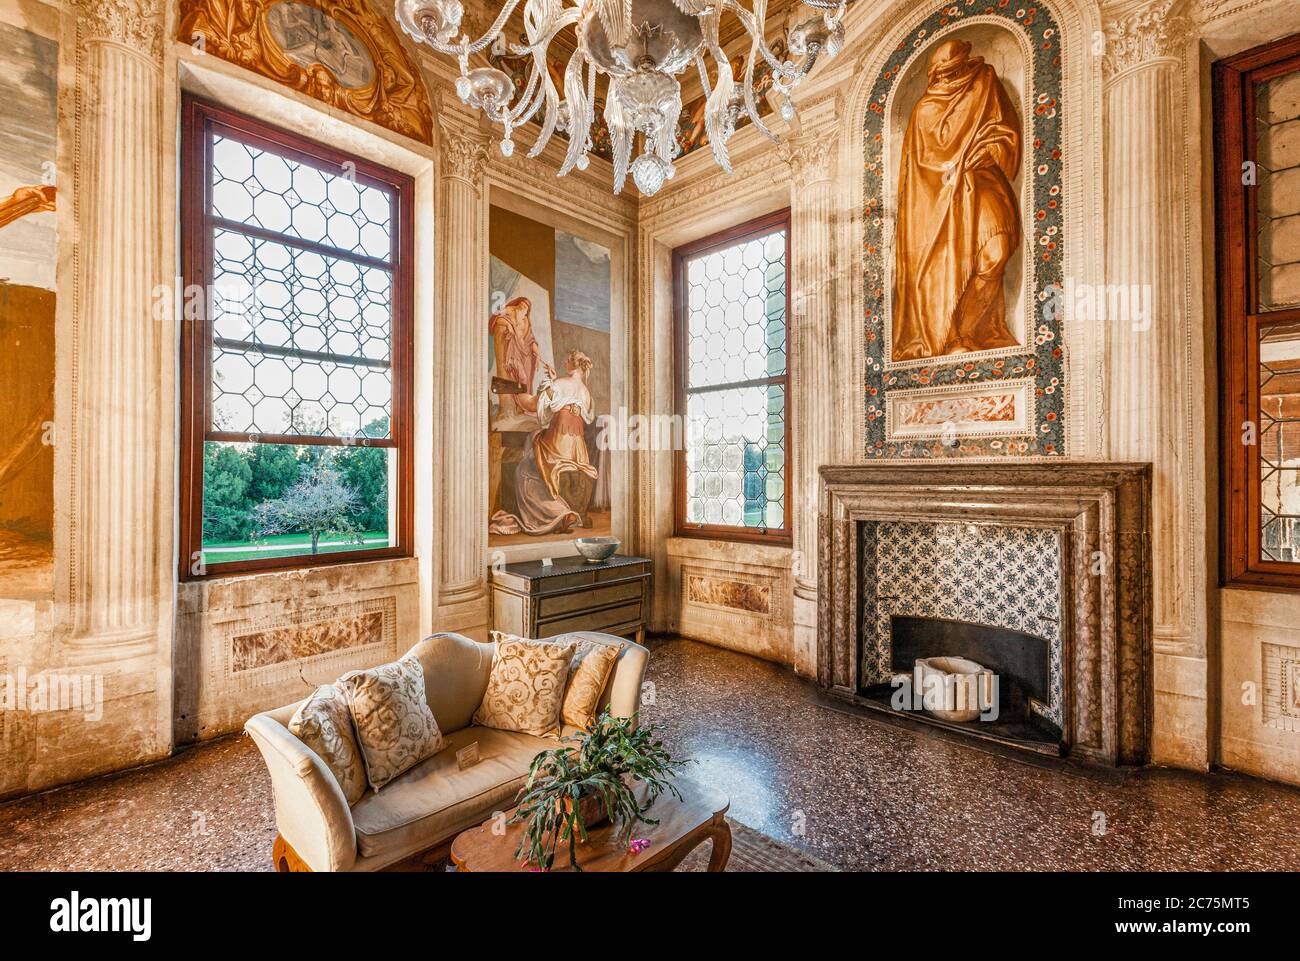 Italie Veneto - Fanzolo - Villa Emo - Andrea Palladio architecte - le Hall des Arts - fresques de Battista Zelotti Banque D'Images